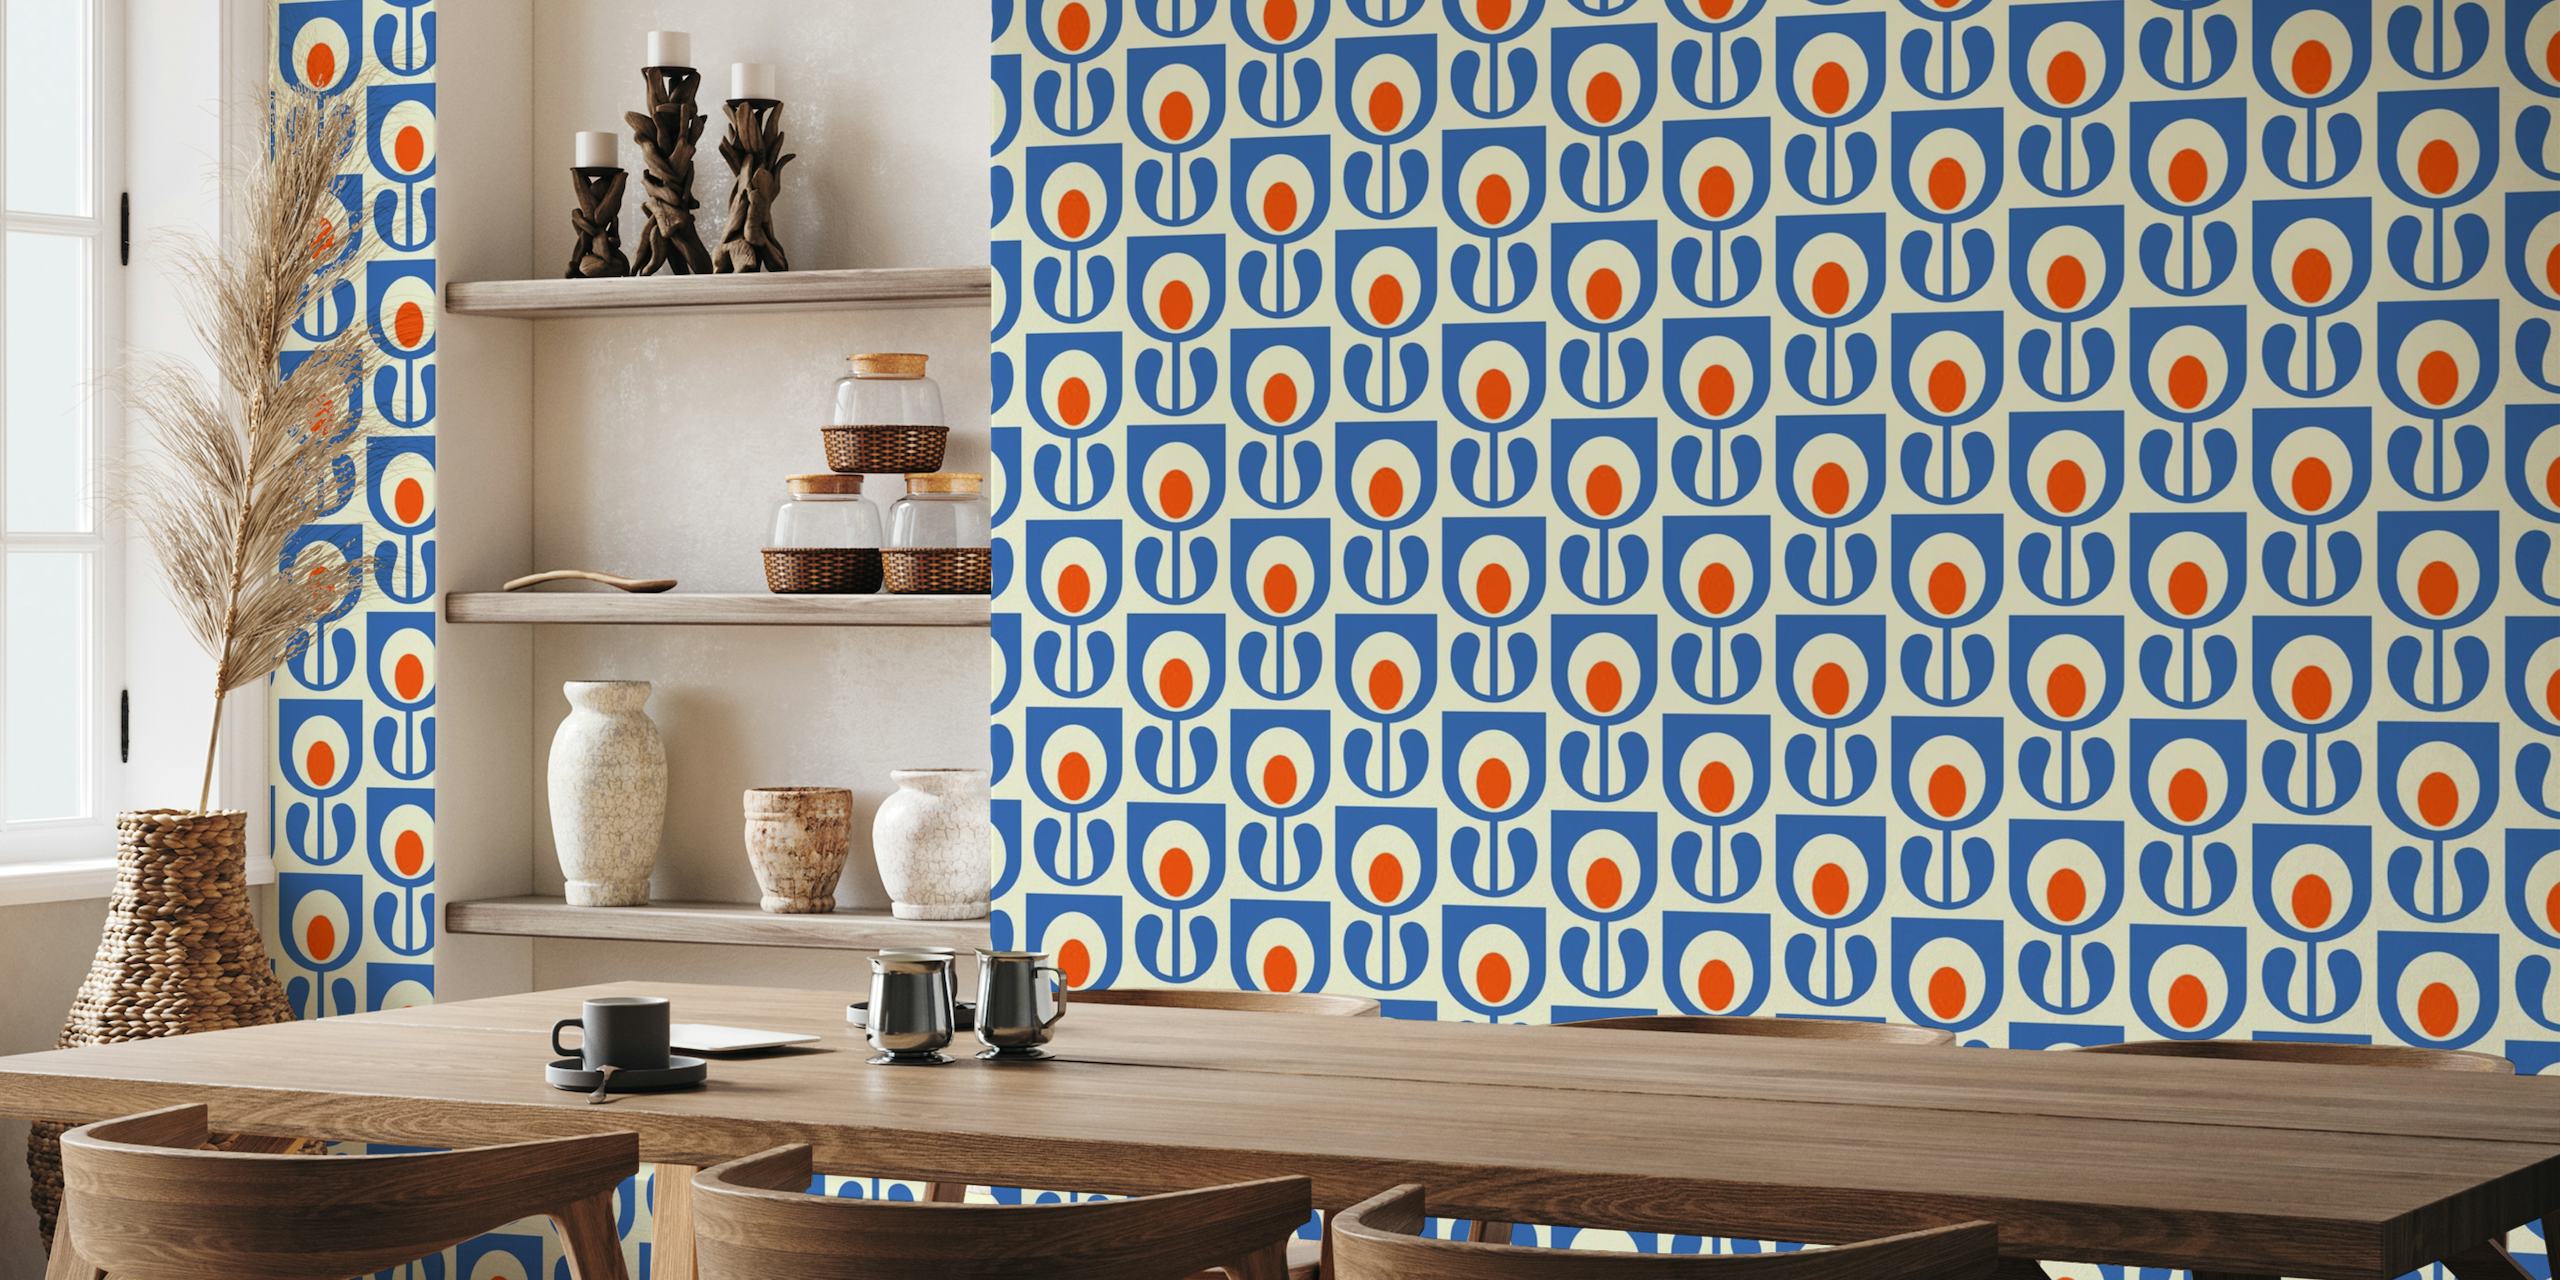 2523 A - retro tulips pattern, blue behang